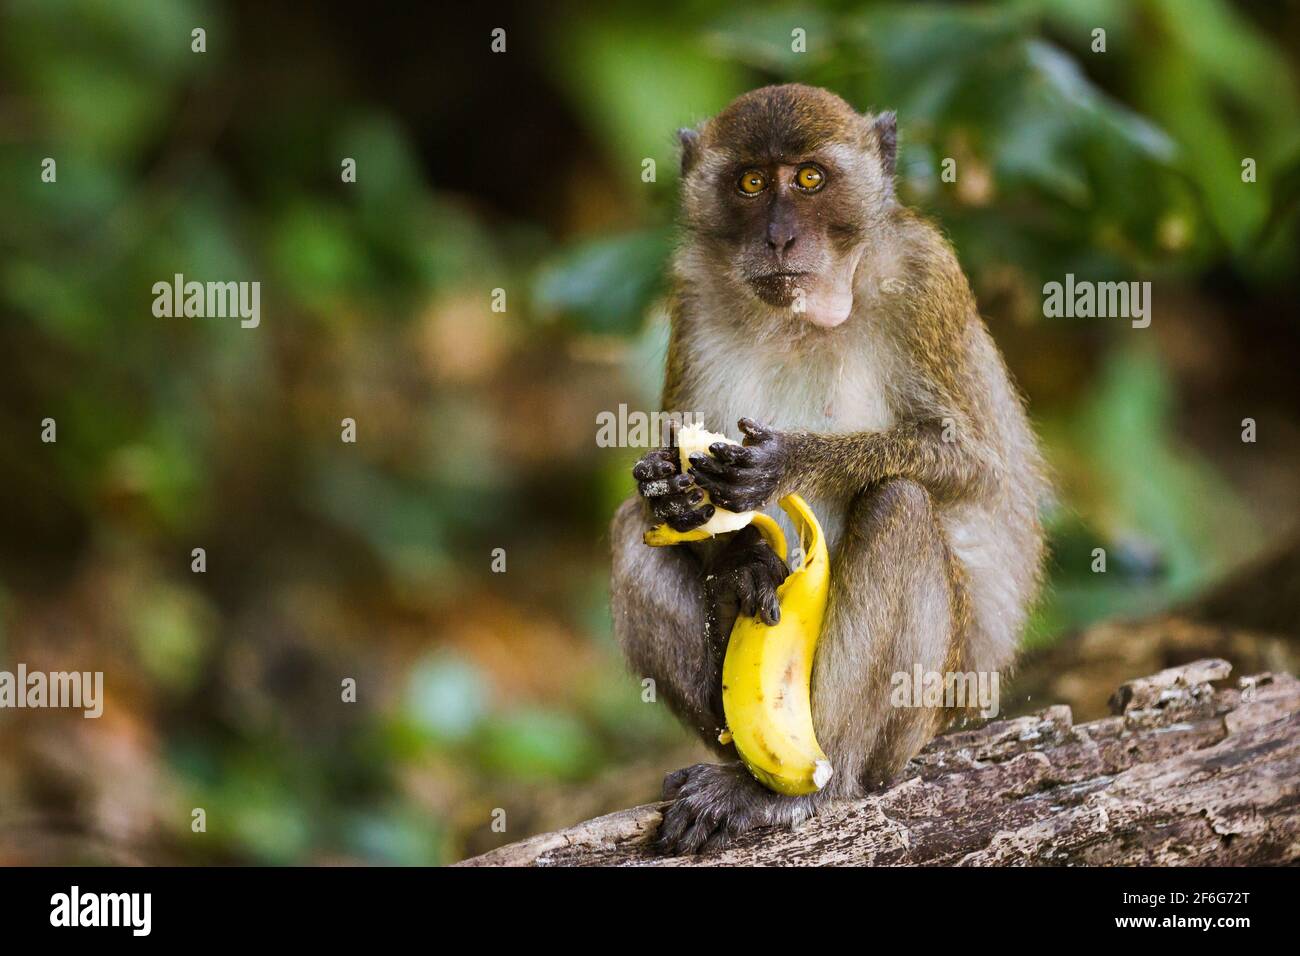 A monkey eating a banana at the Monkey Beach in Phi Phi Islands, Phuket, Thailand. Stock Photo